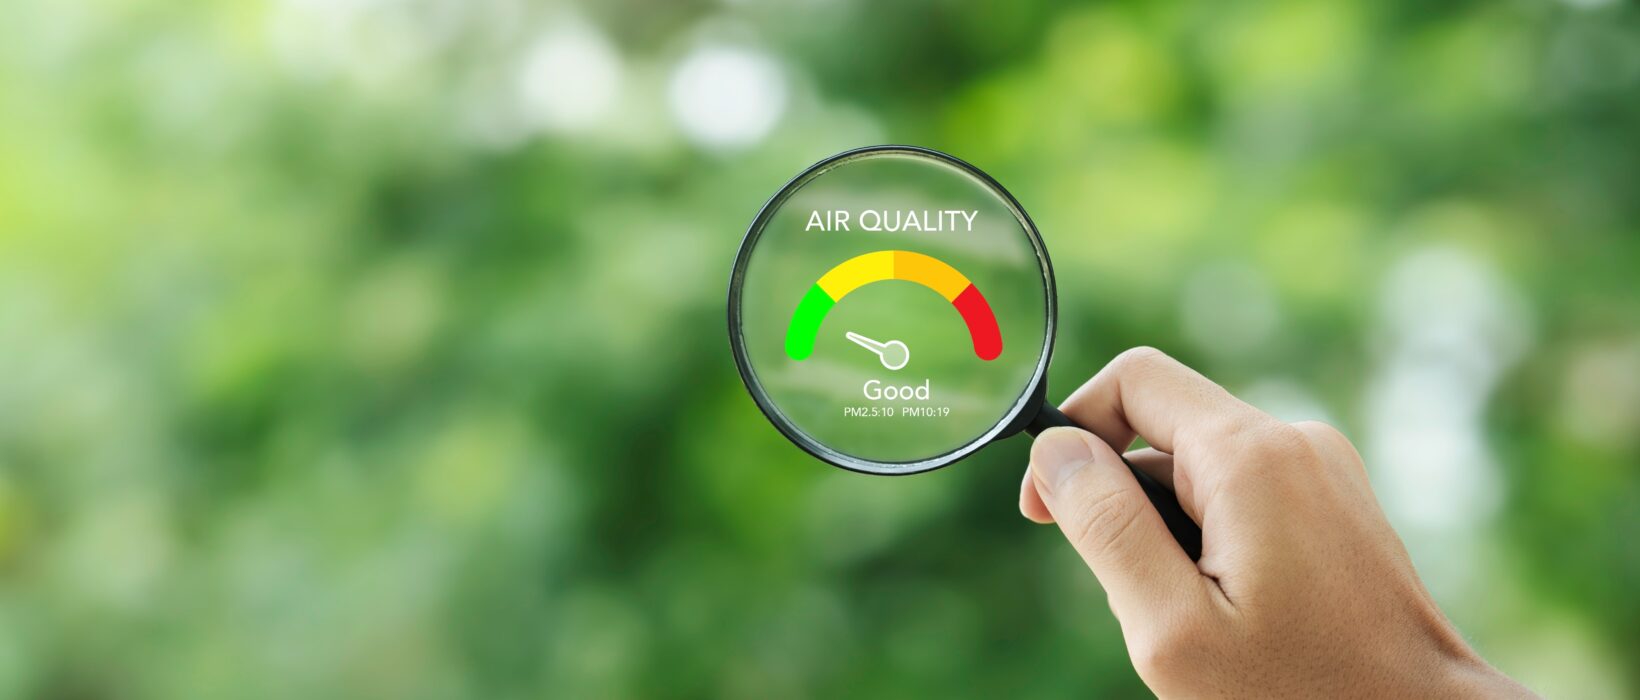 10 Essential Steps to Ensure Your Home’s Air Quality: Hurricane Season Edition